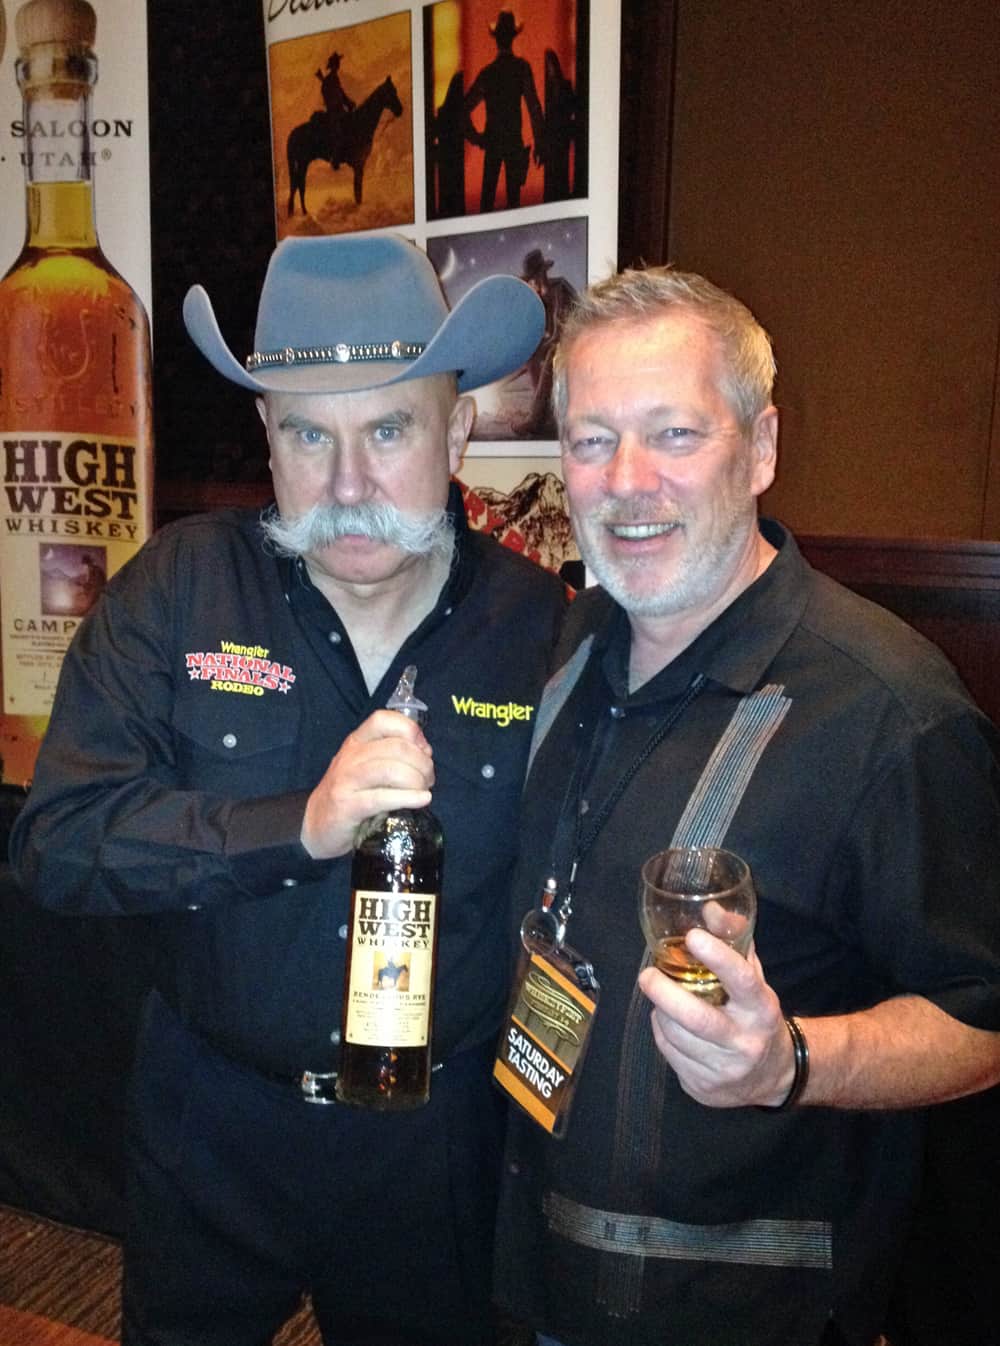 WhiskeyFest 2014 - High West Dude, Las Vegas, NV